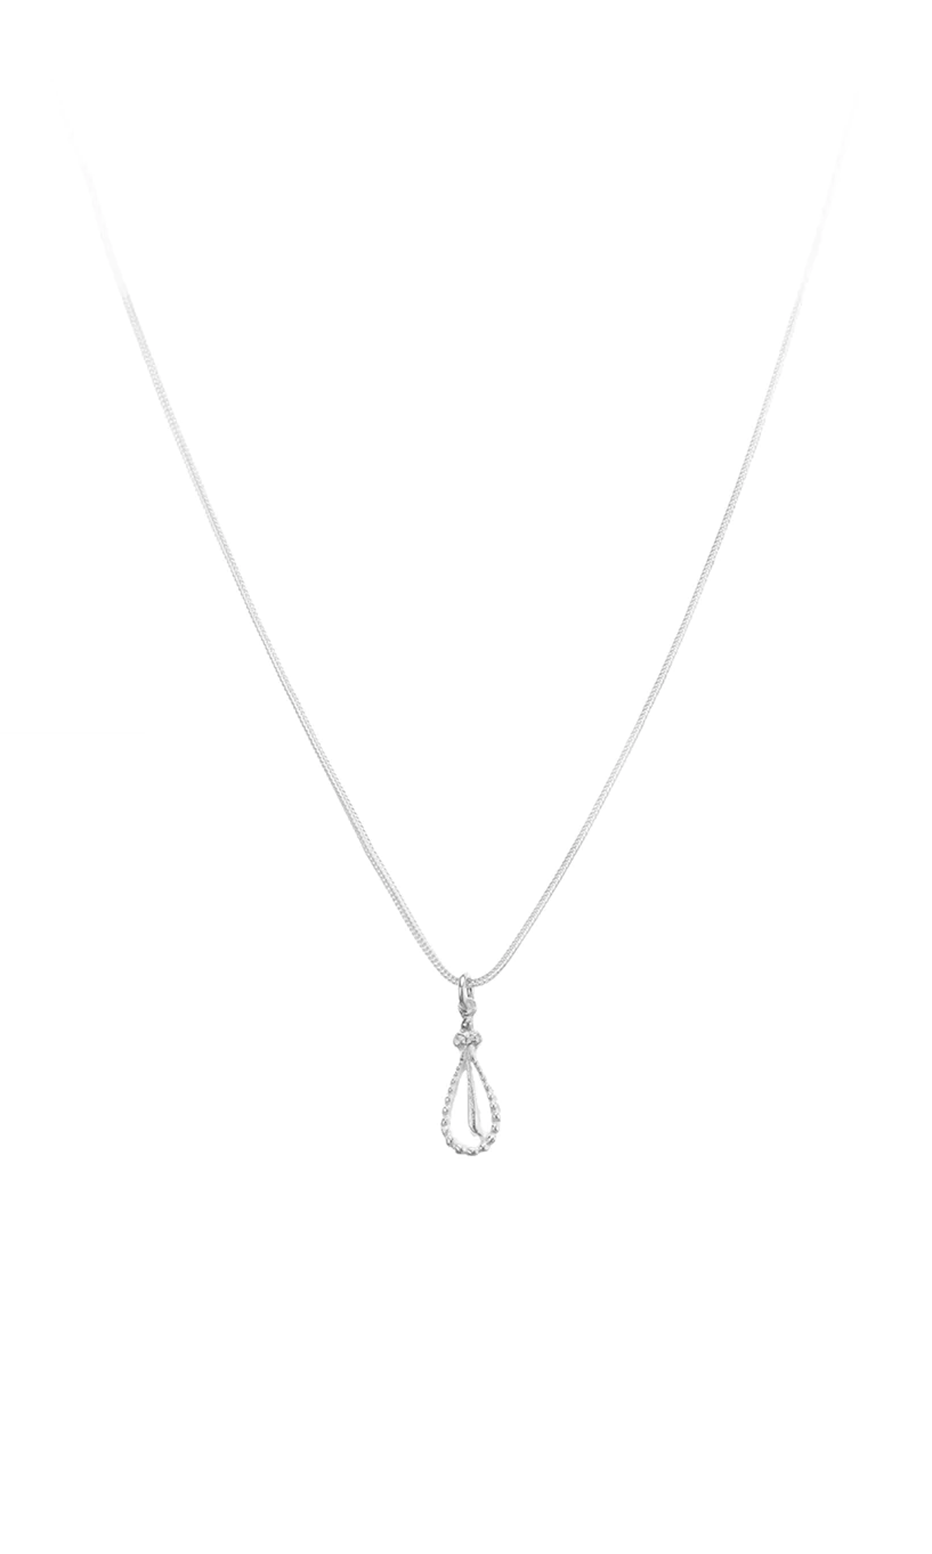 JMC simple necklace with pendant